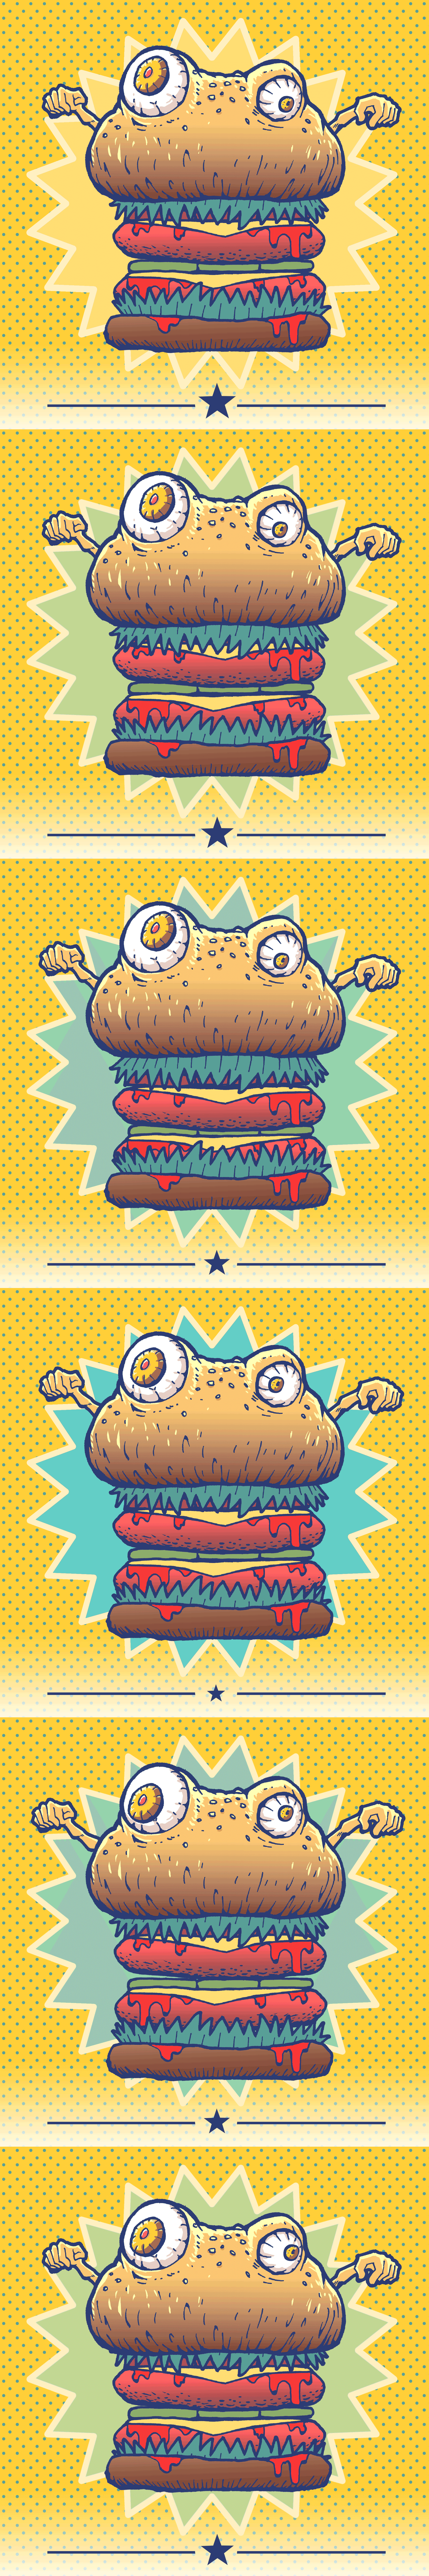 #007 Double Meat Burger